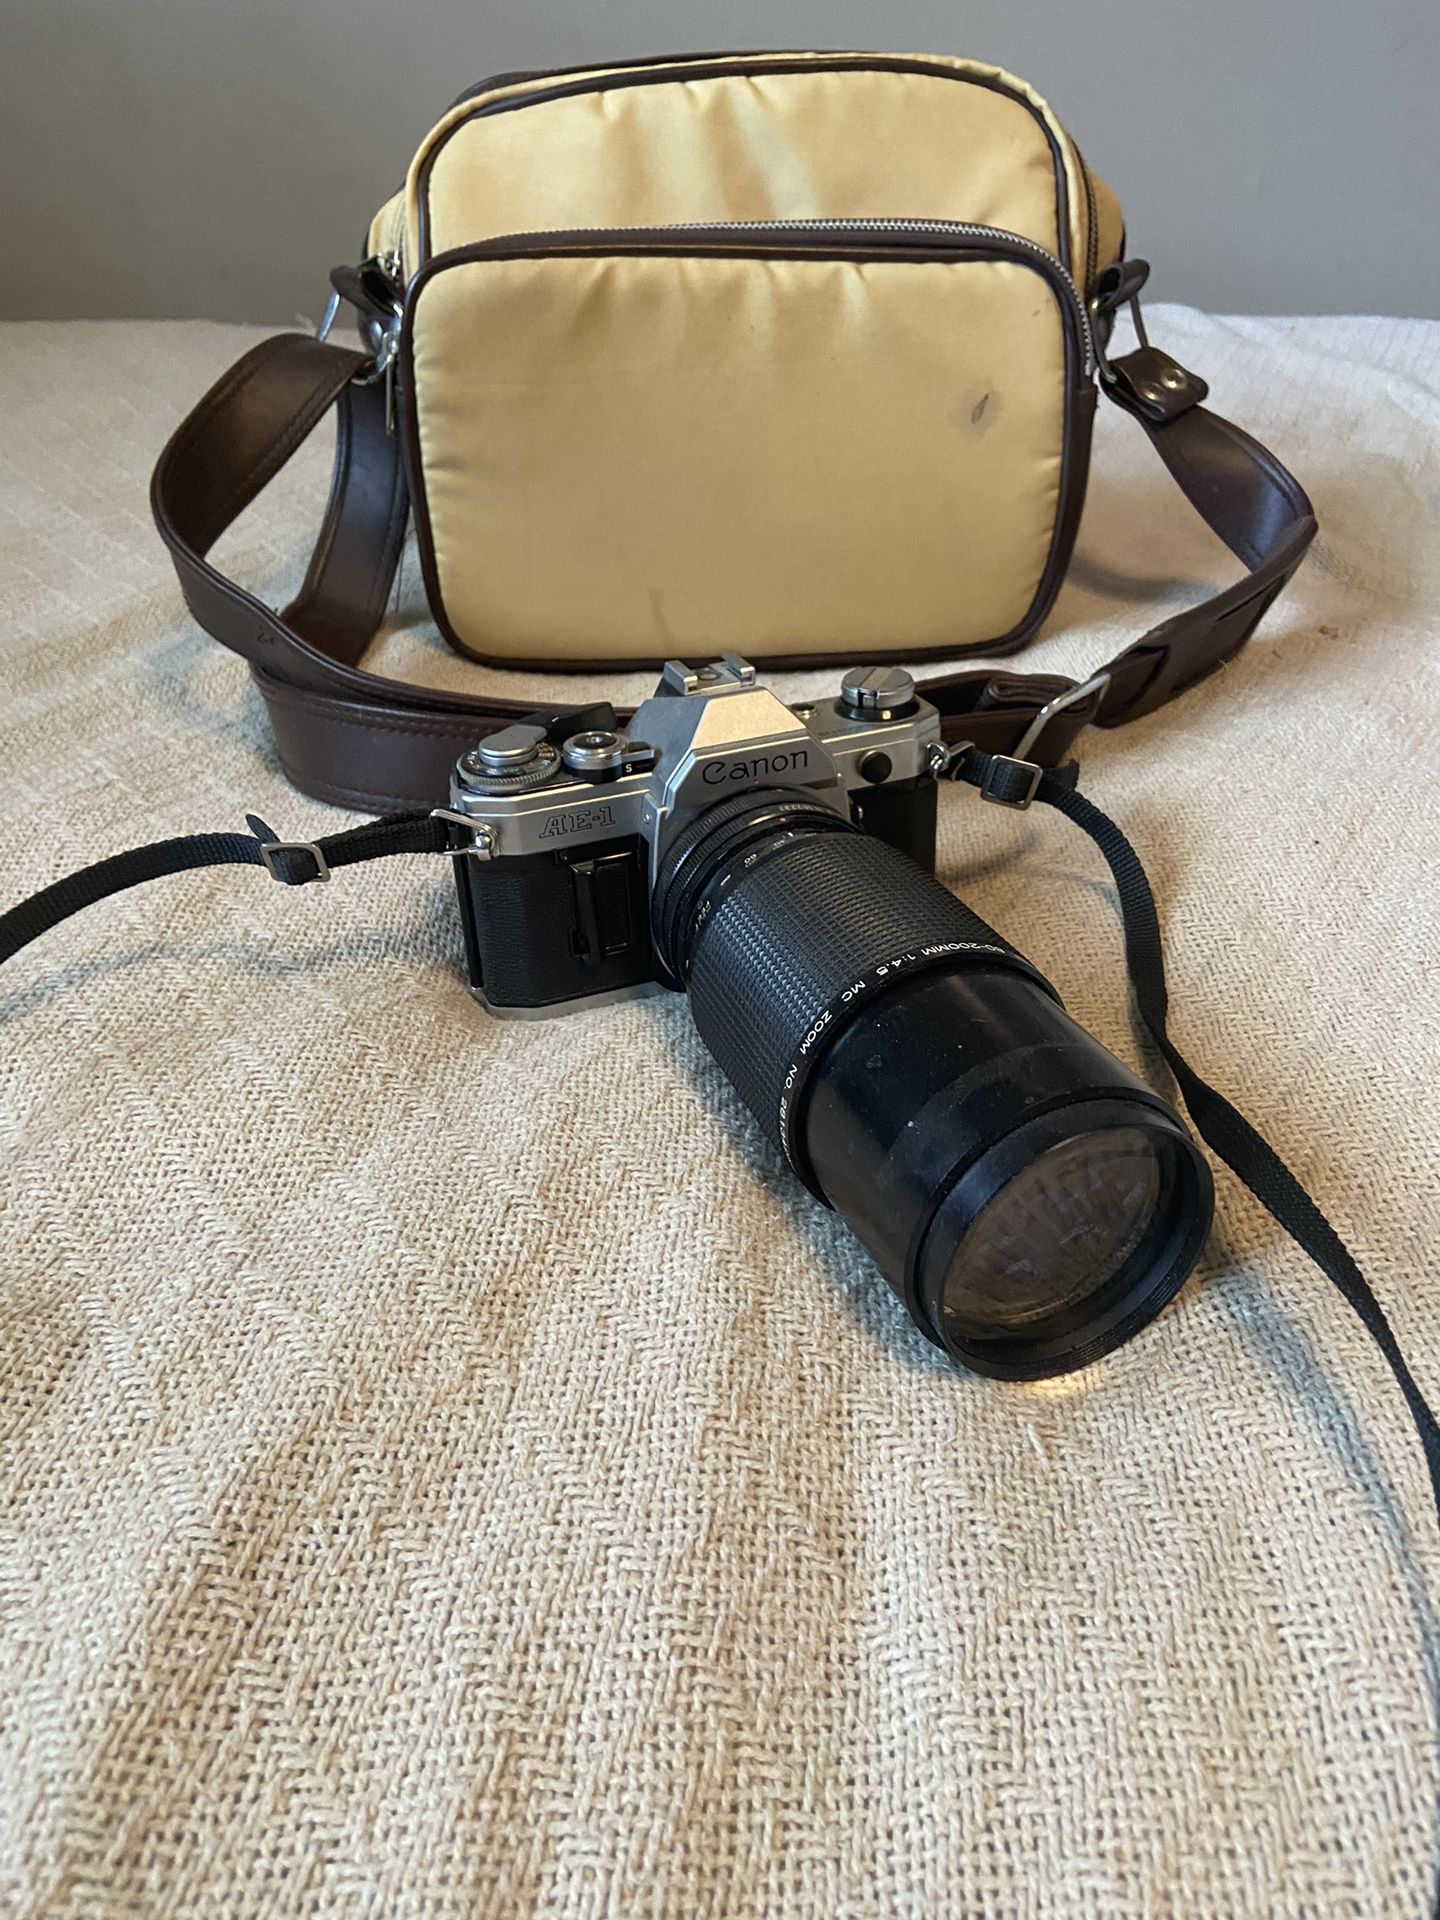 Vintage Cannon AE1 Camera With Shoulder Bag 